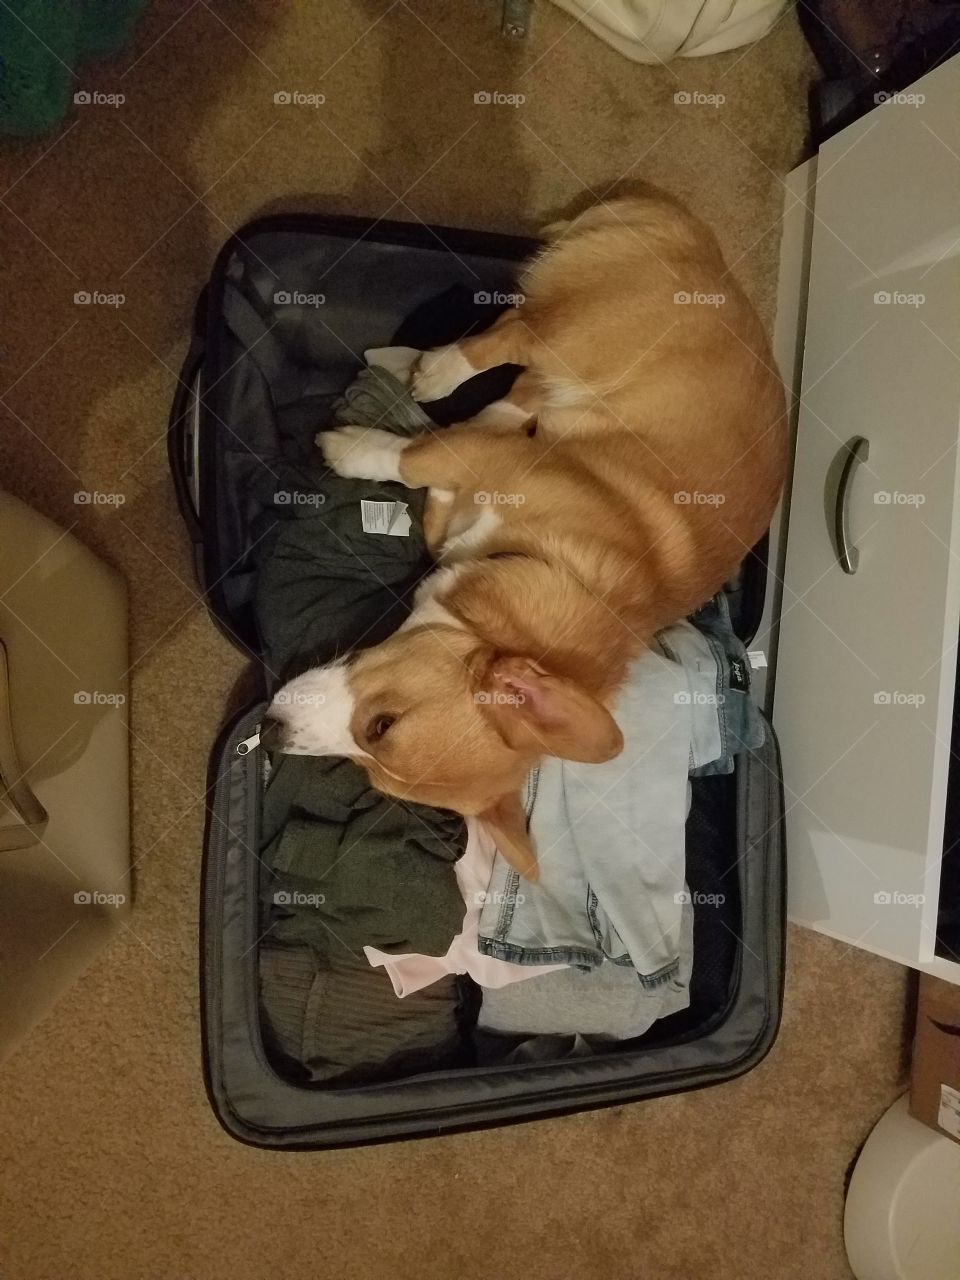 Take me with you mom